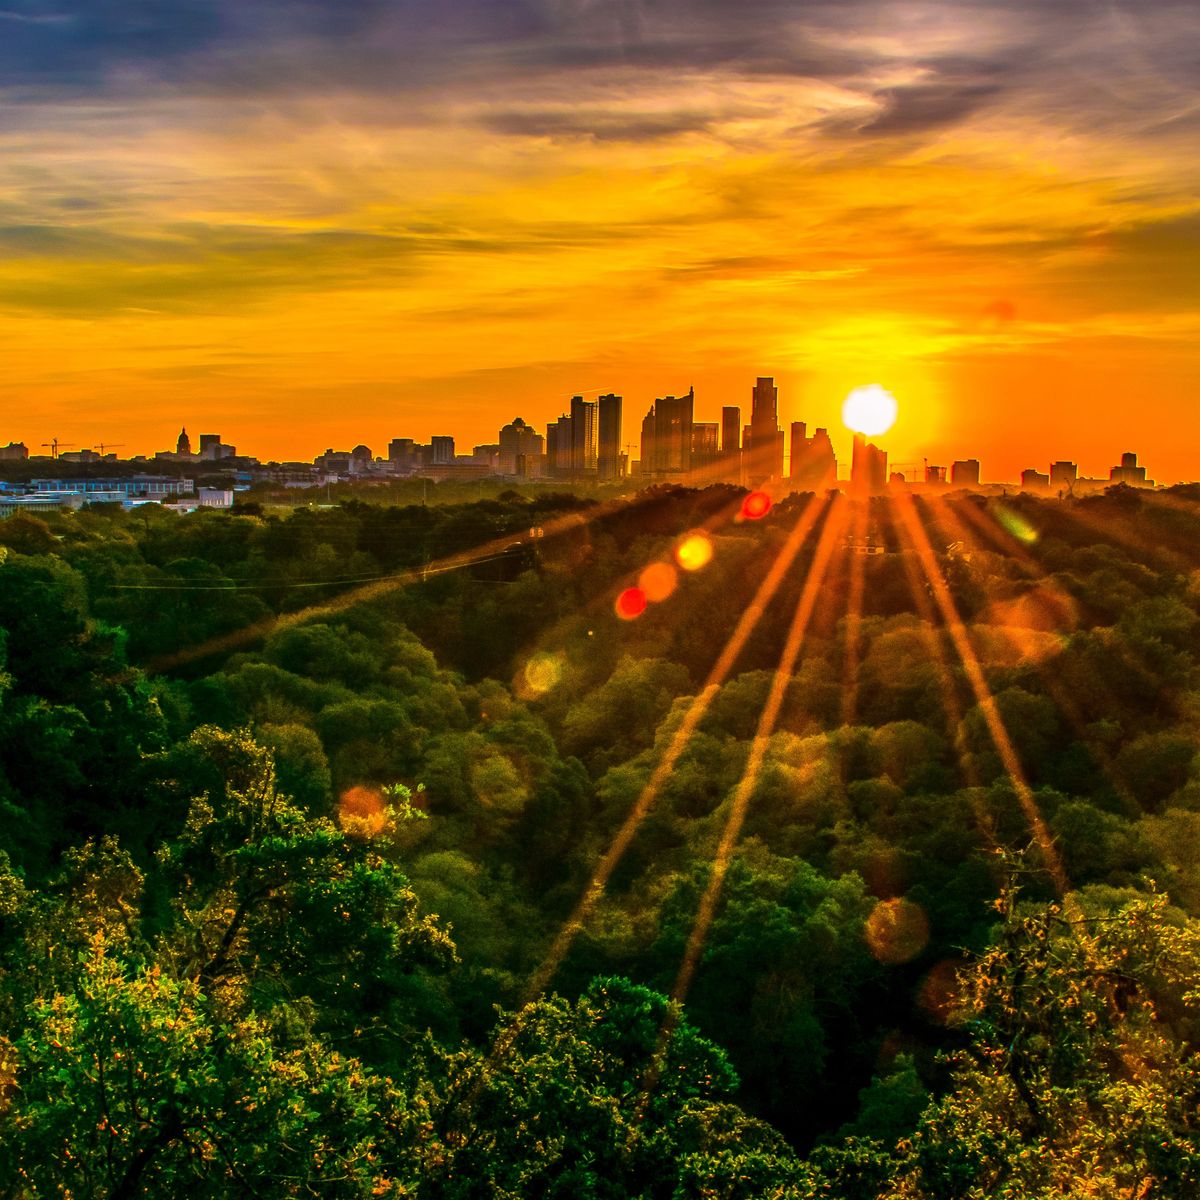 Sunset view of Austin, TX skyline